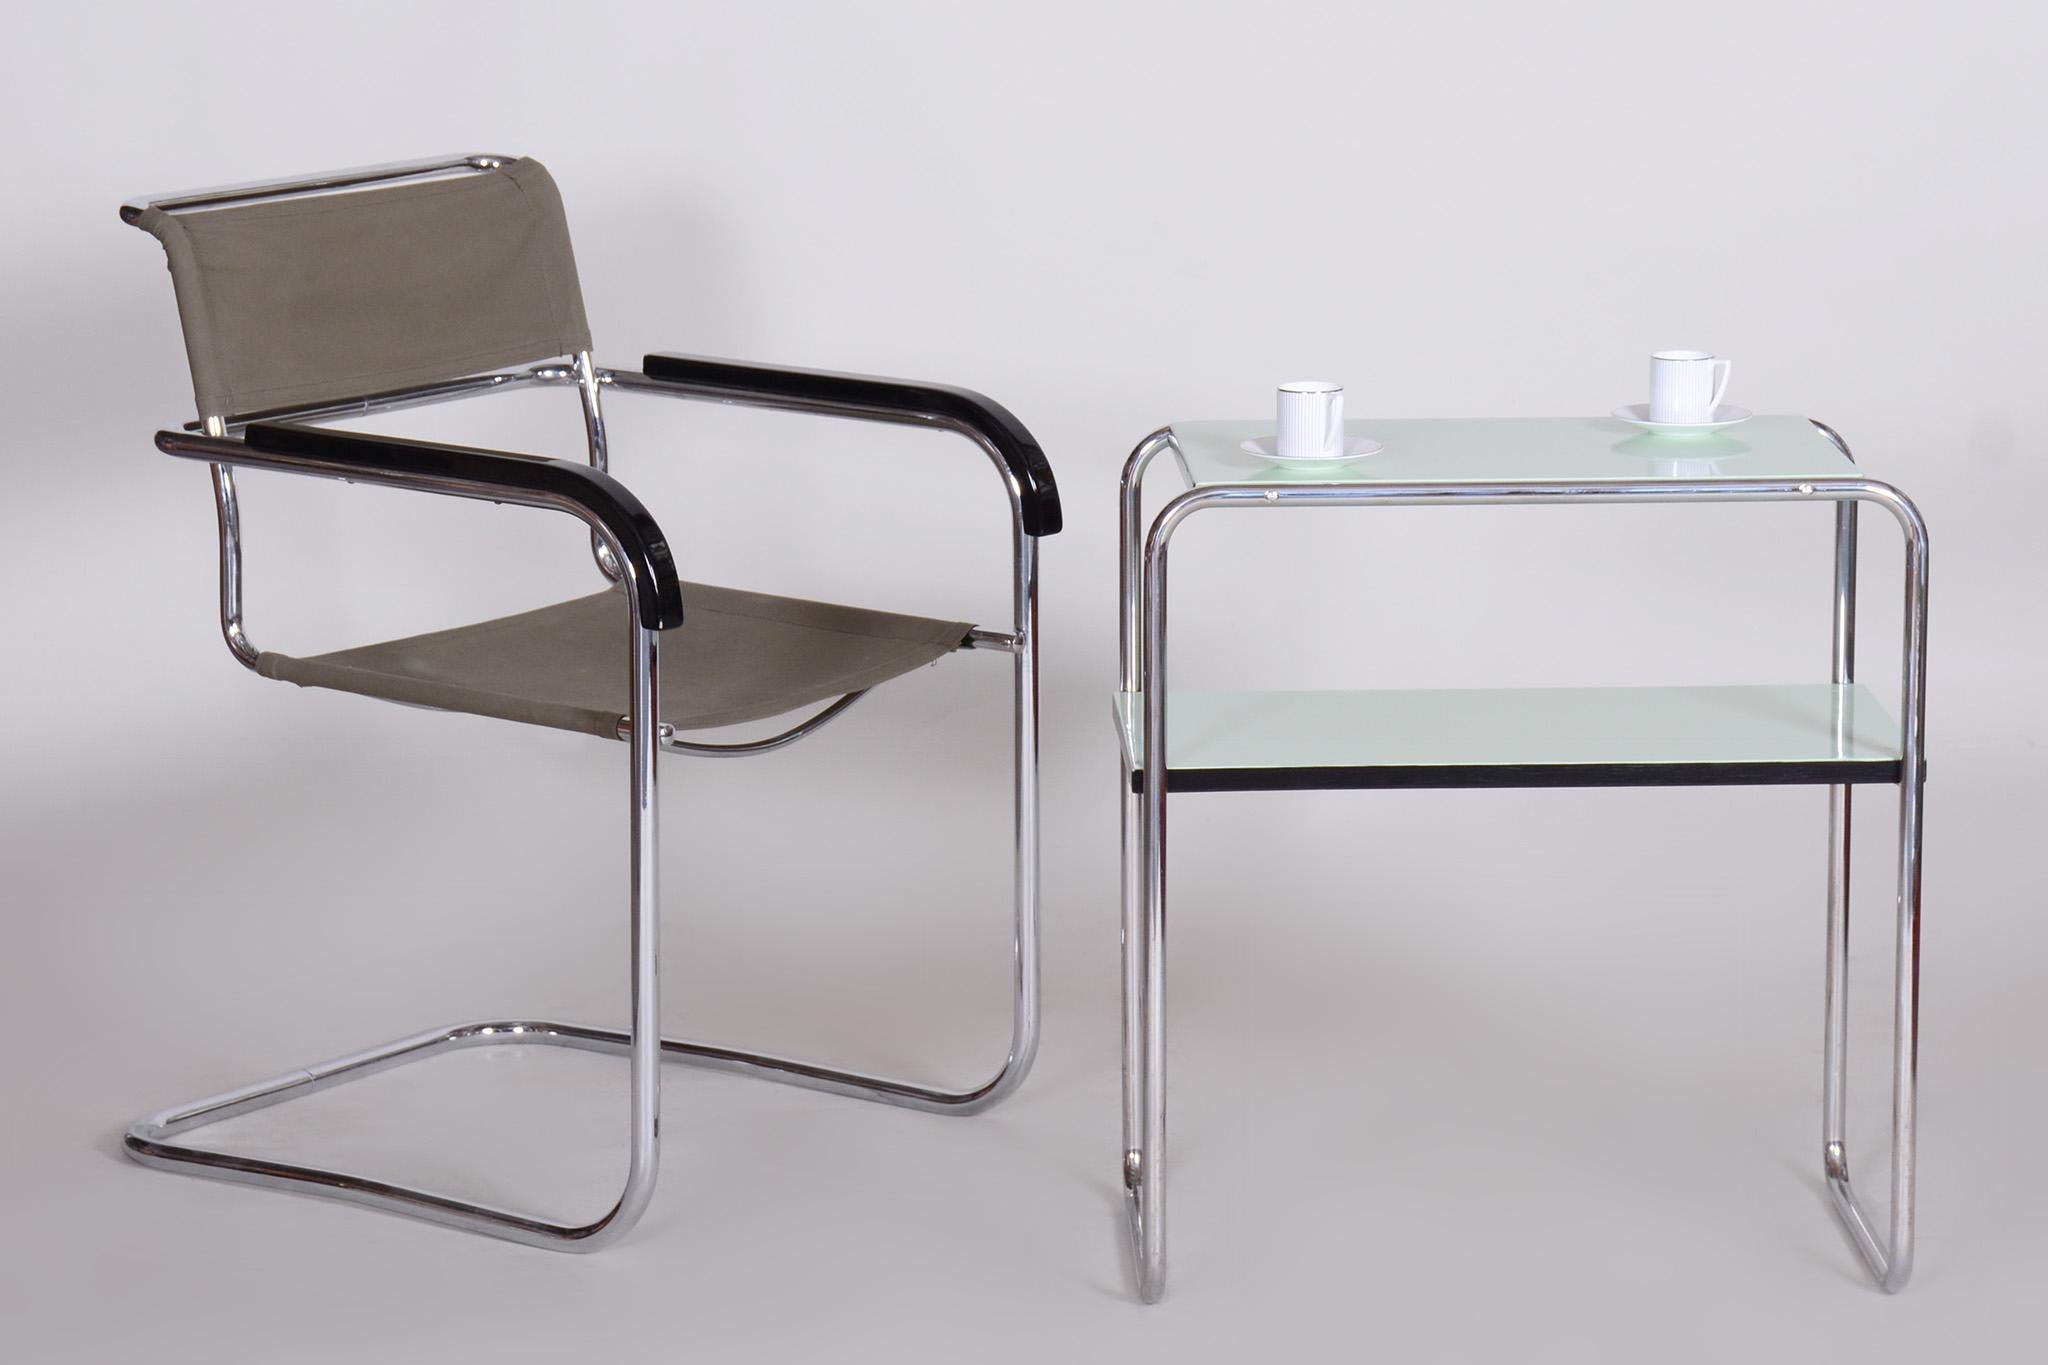 Restored Art Deco Side Table, Marcel Breuer, Thonet Chrome Steel, Germany, 1930s For Sale 3